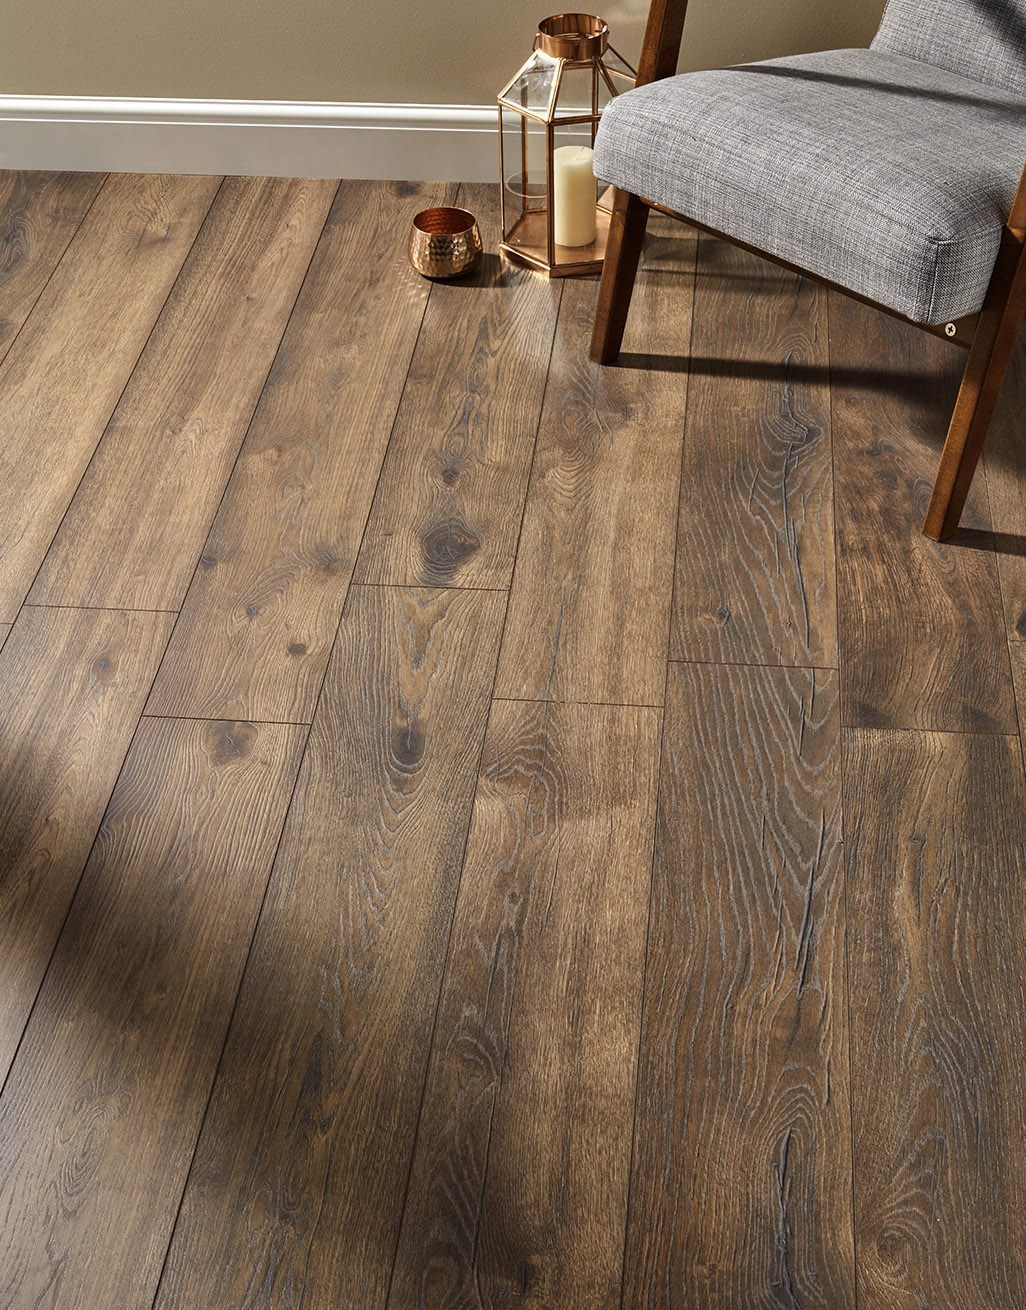 Villa - Peterson Oak Laminate Flooring 1